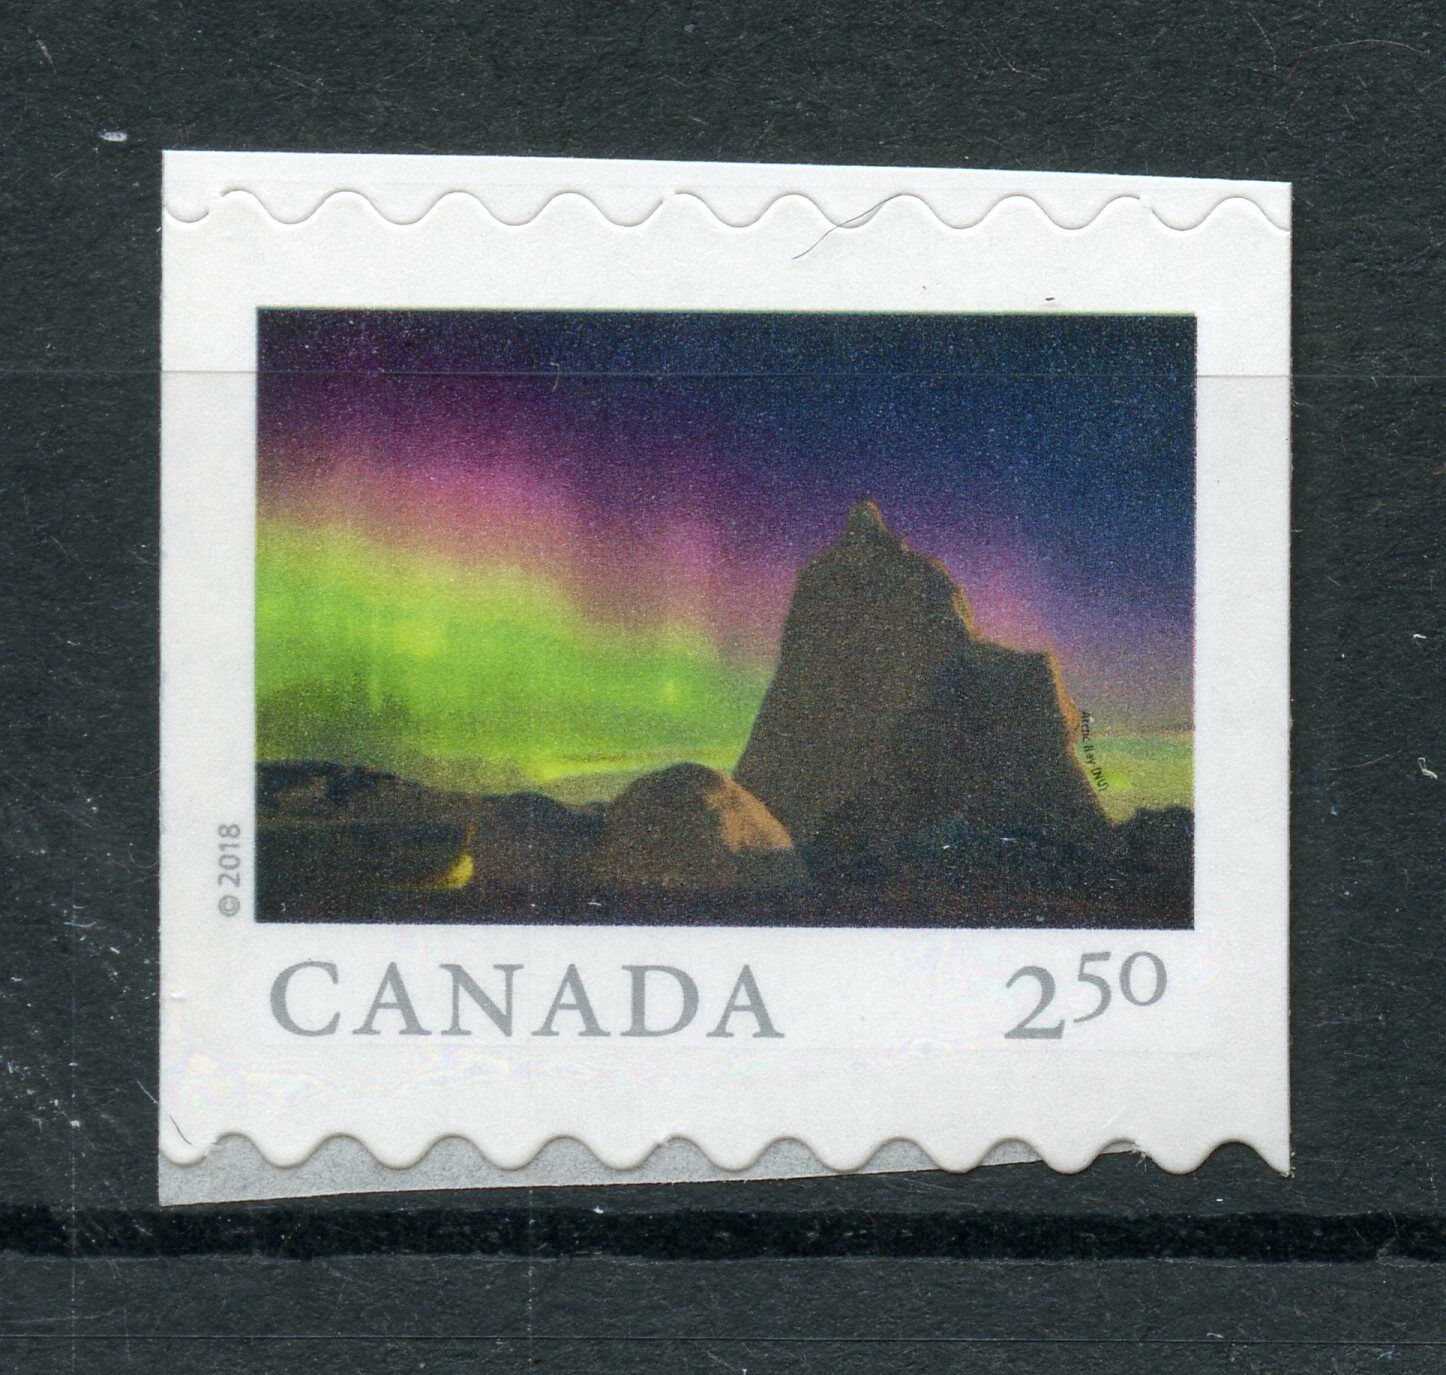 Canada 2018 MNH Arctic Bay 1v S/A Coil Set Tourism & Landscapes Nature Stamps